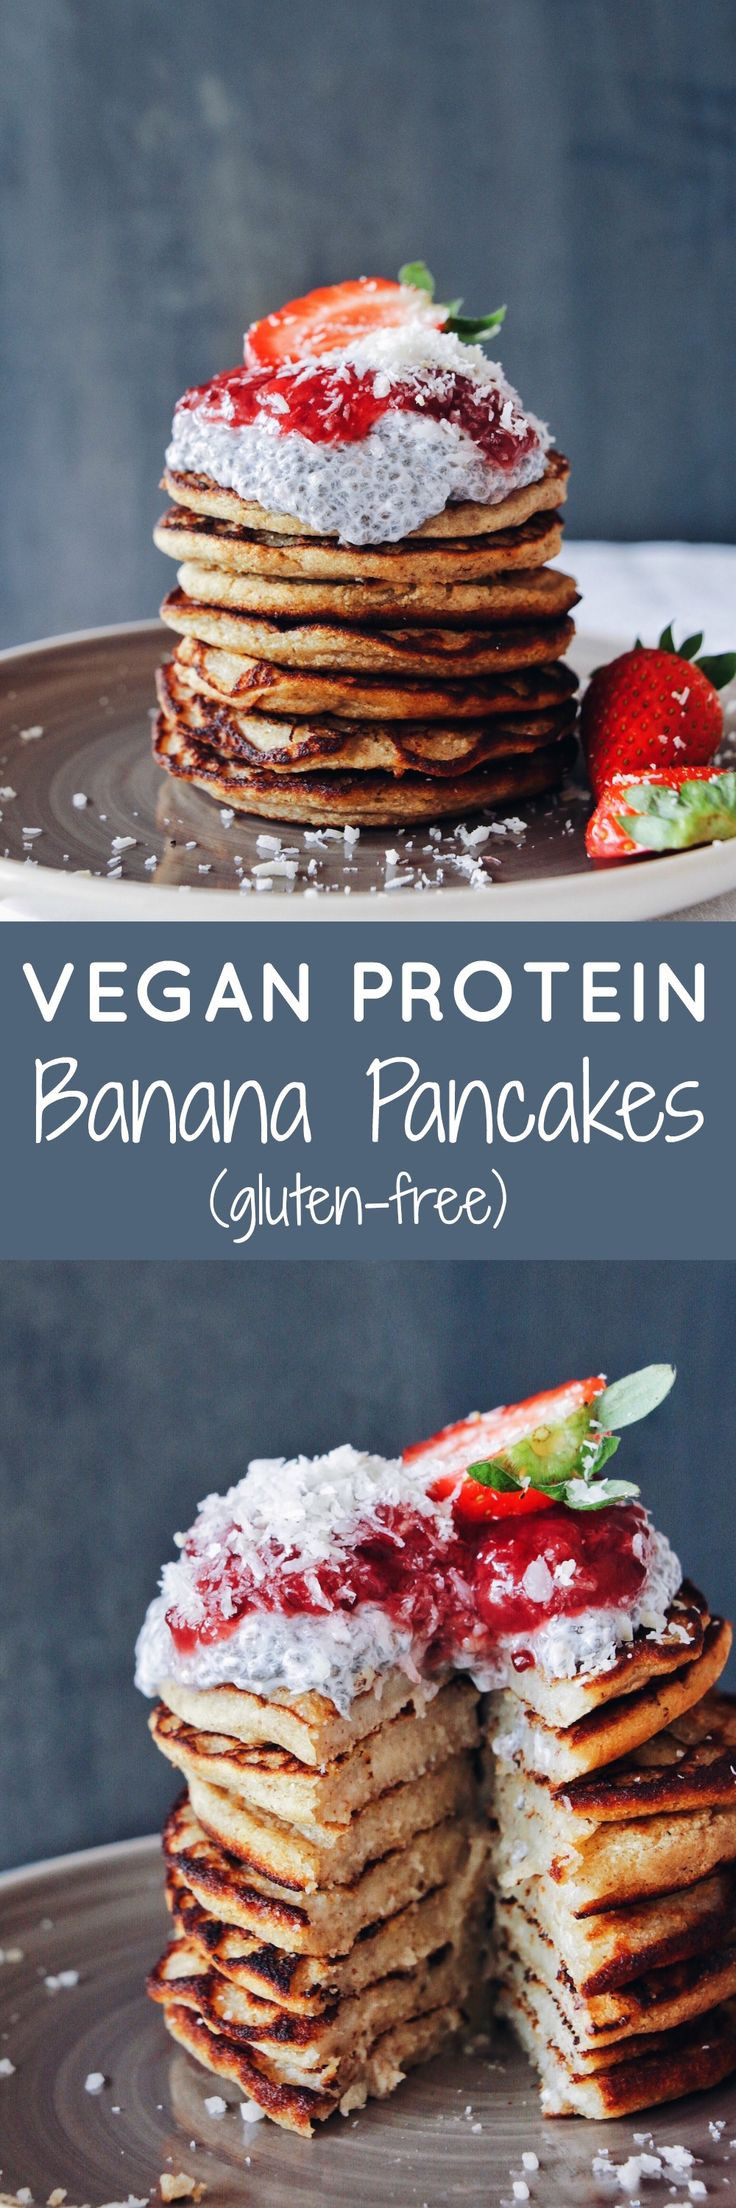 Vegan Protein Pancakes Low Carb
 Super easy and very satisfying vegan protein banana